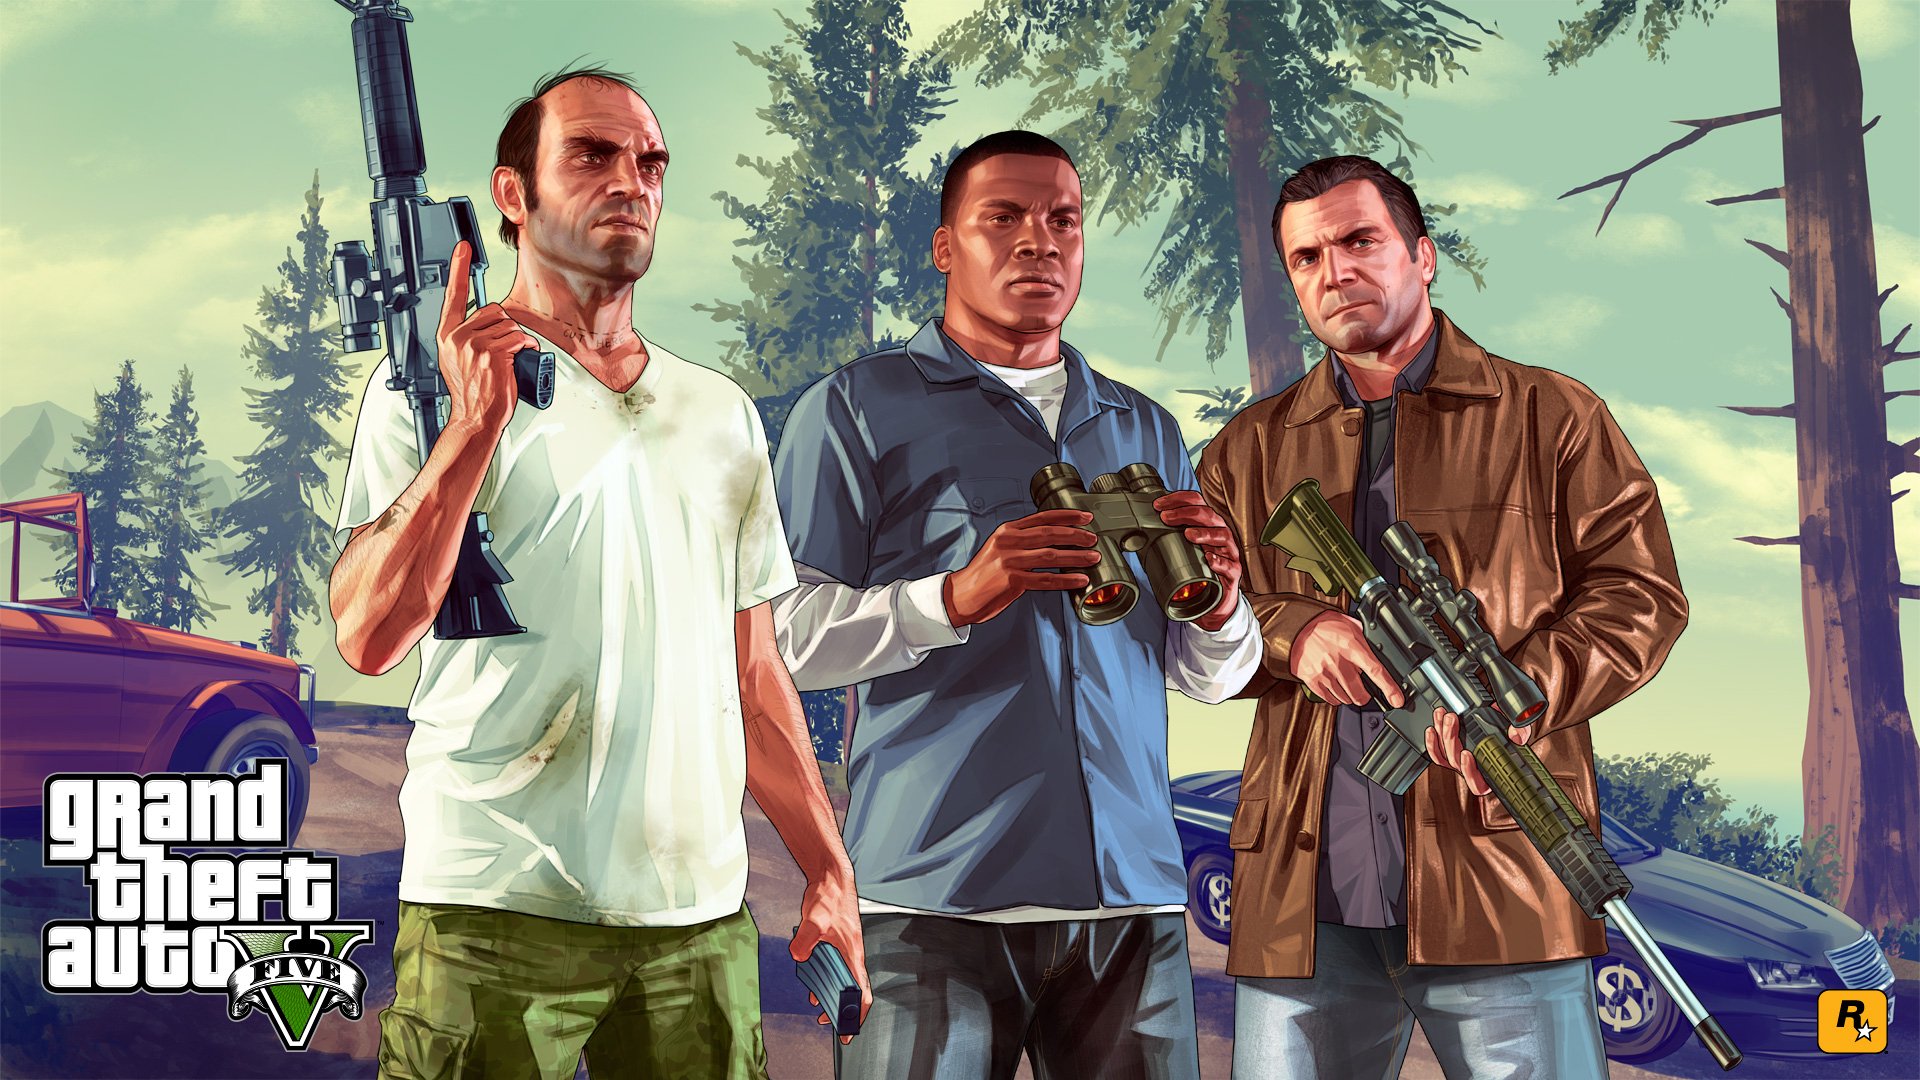 Rockstar Games Shuts Down GTA Servers to Honor George Floyd - And